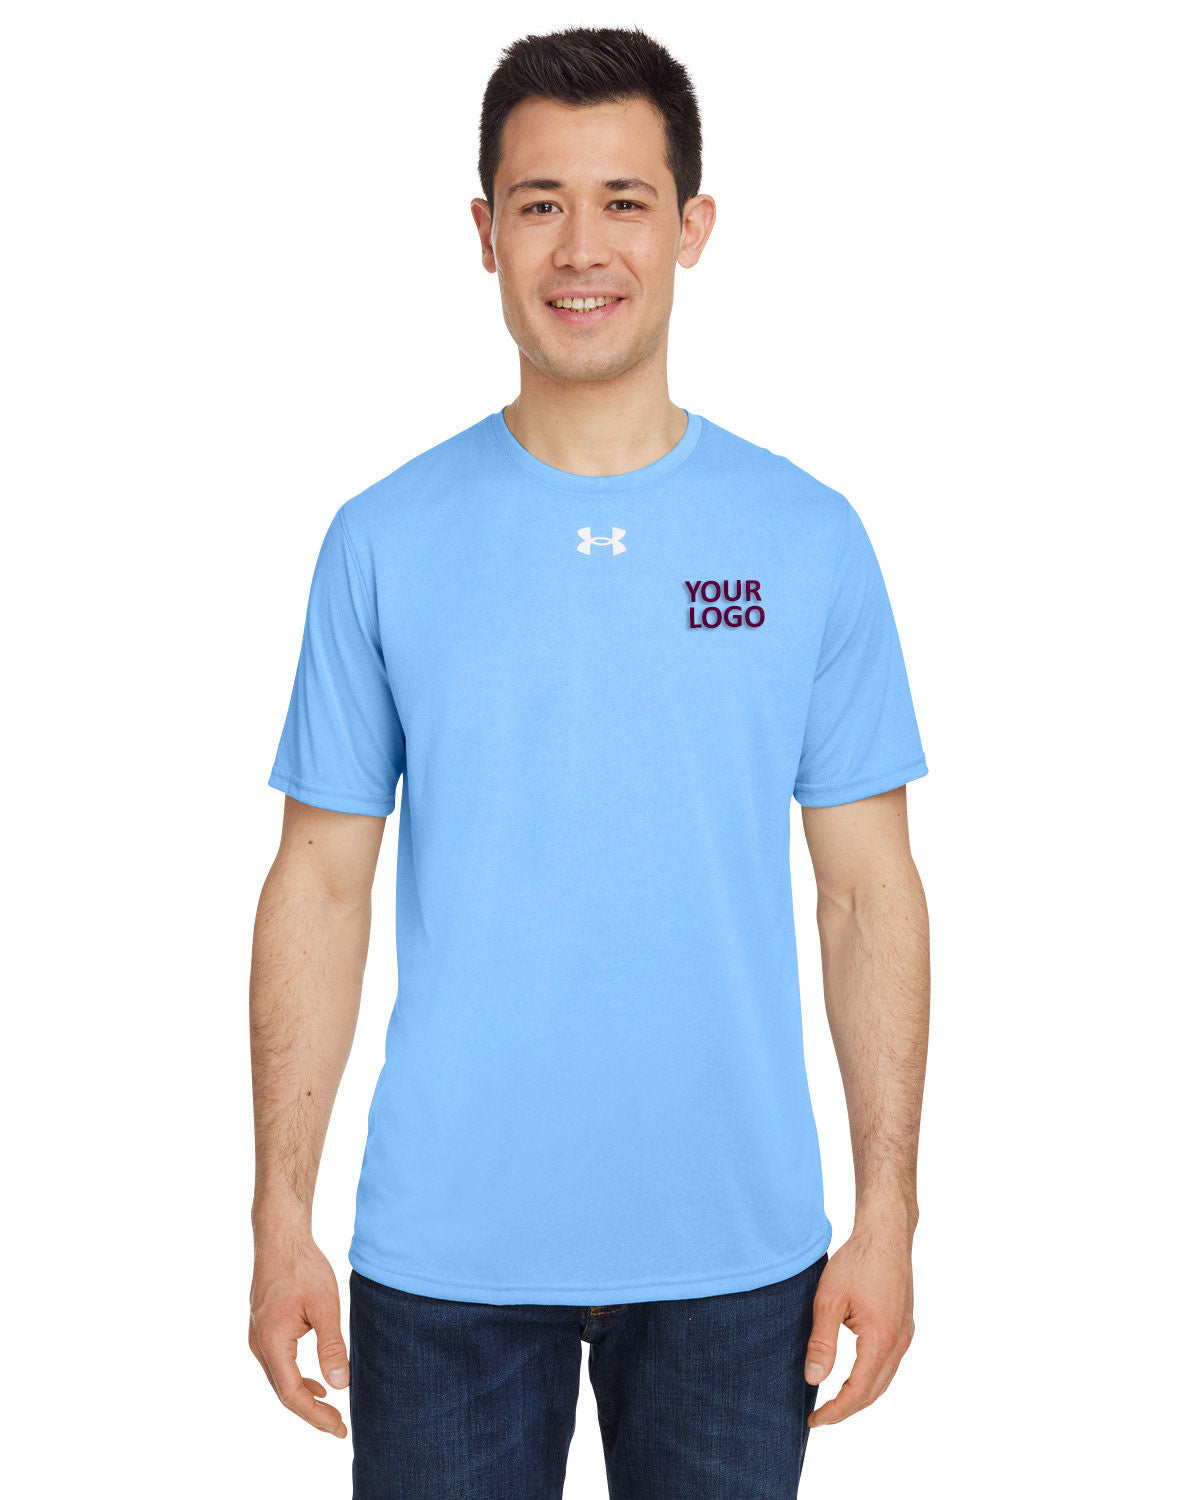 Under Armour Men's Tech Customized T-Shirts, Carol Blue